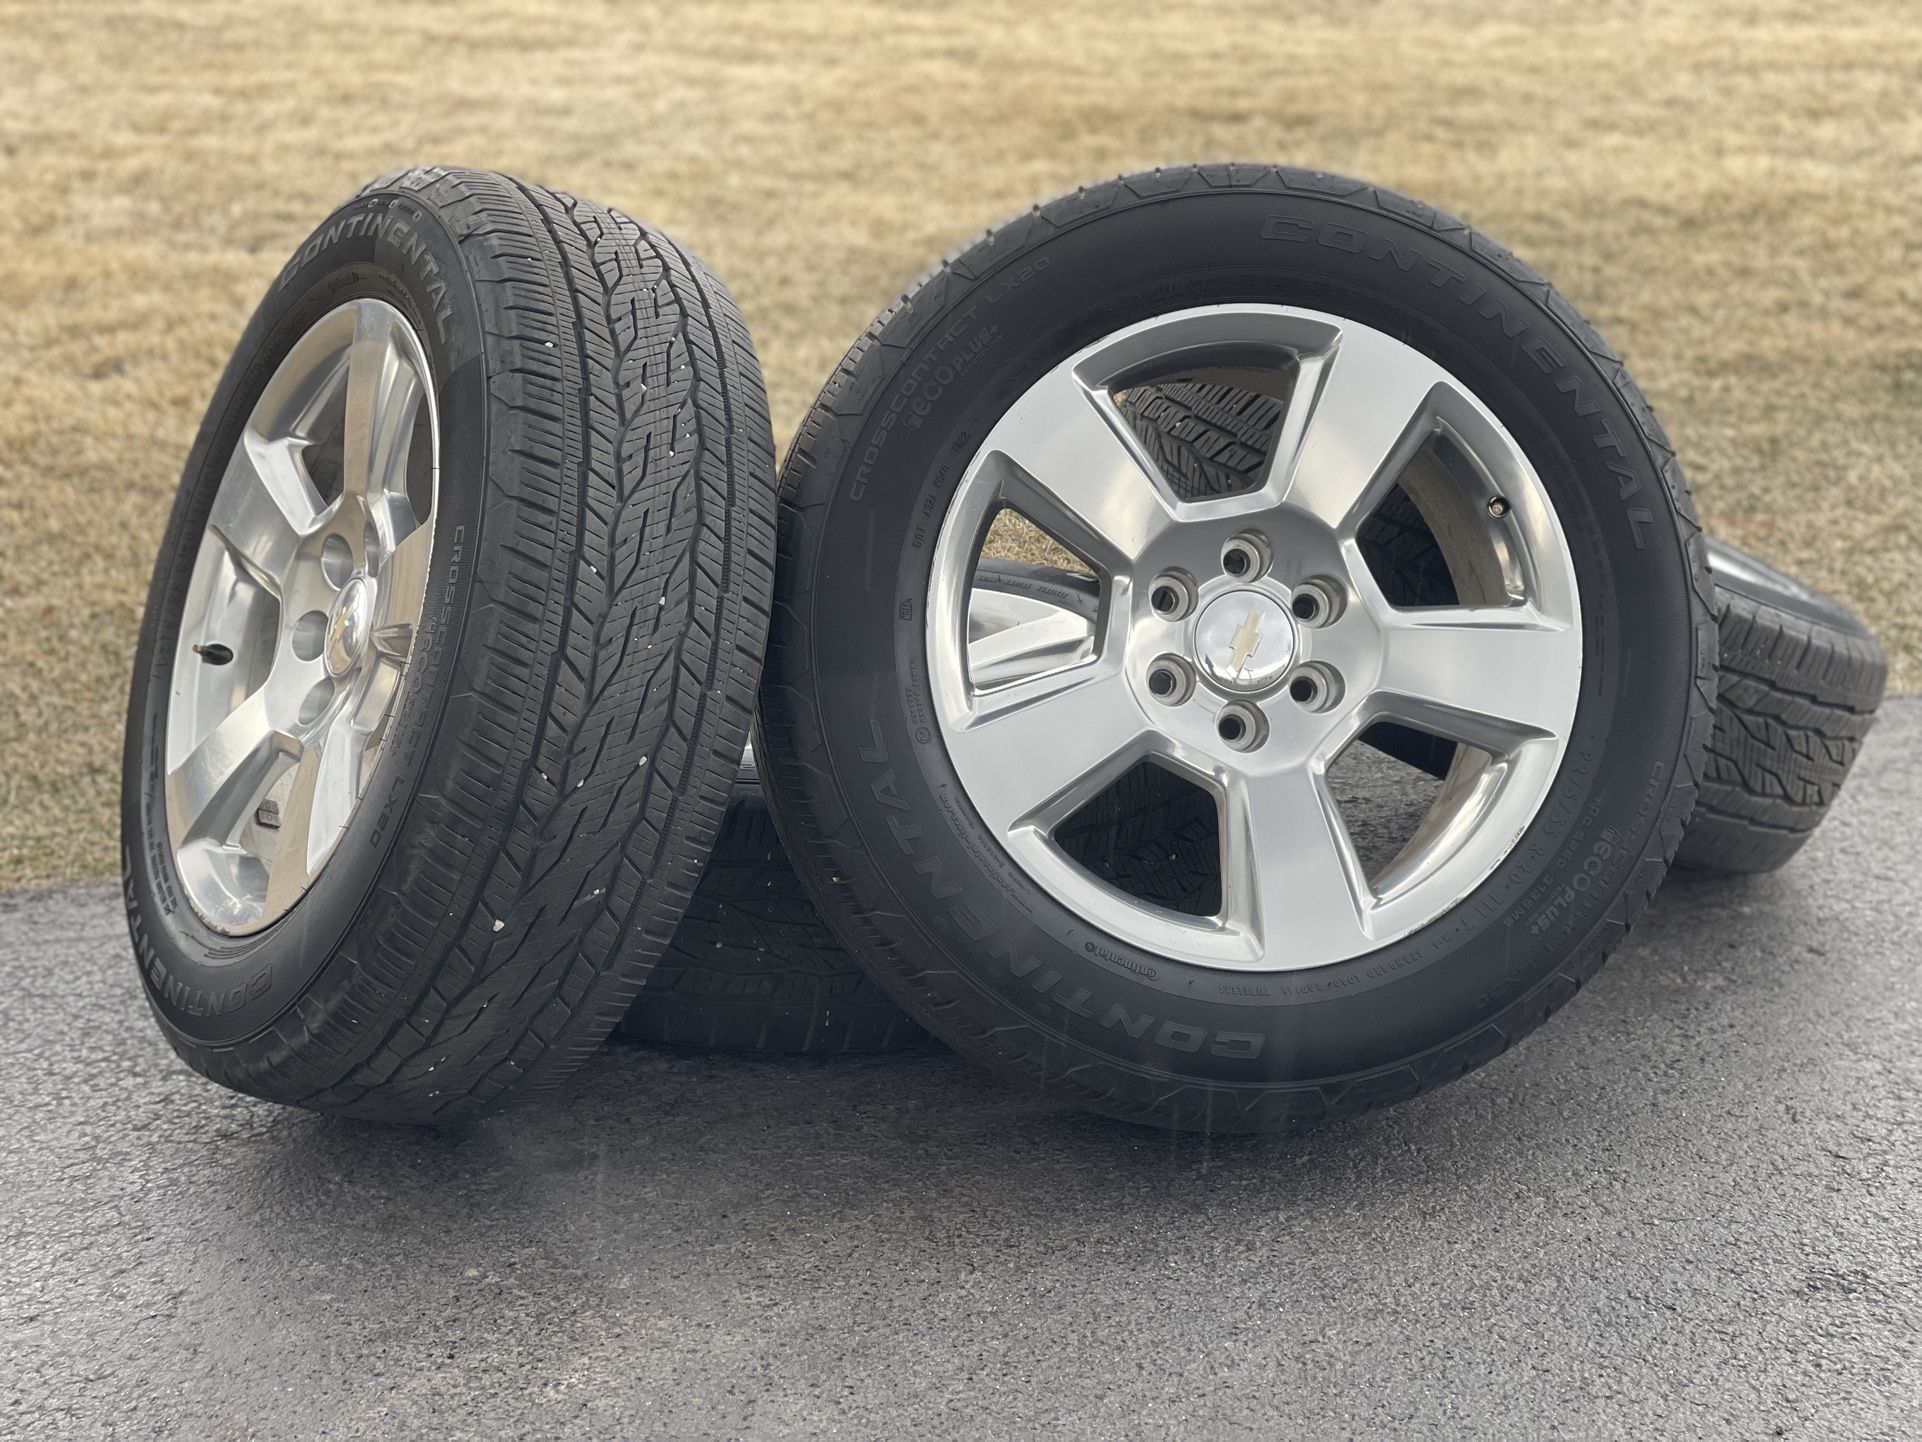 20” Chevy Silverado wheels 6x5.5 Tahoe LTZ rims GMC Sierra Tires Suburban Avalanche Yukon